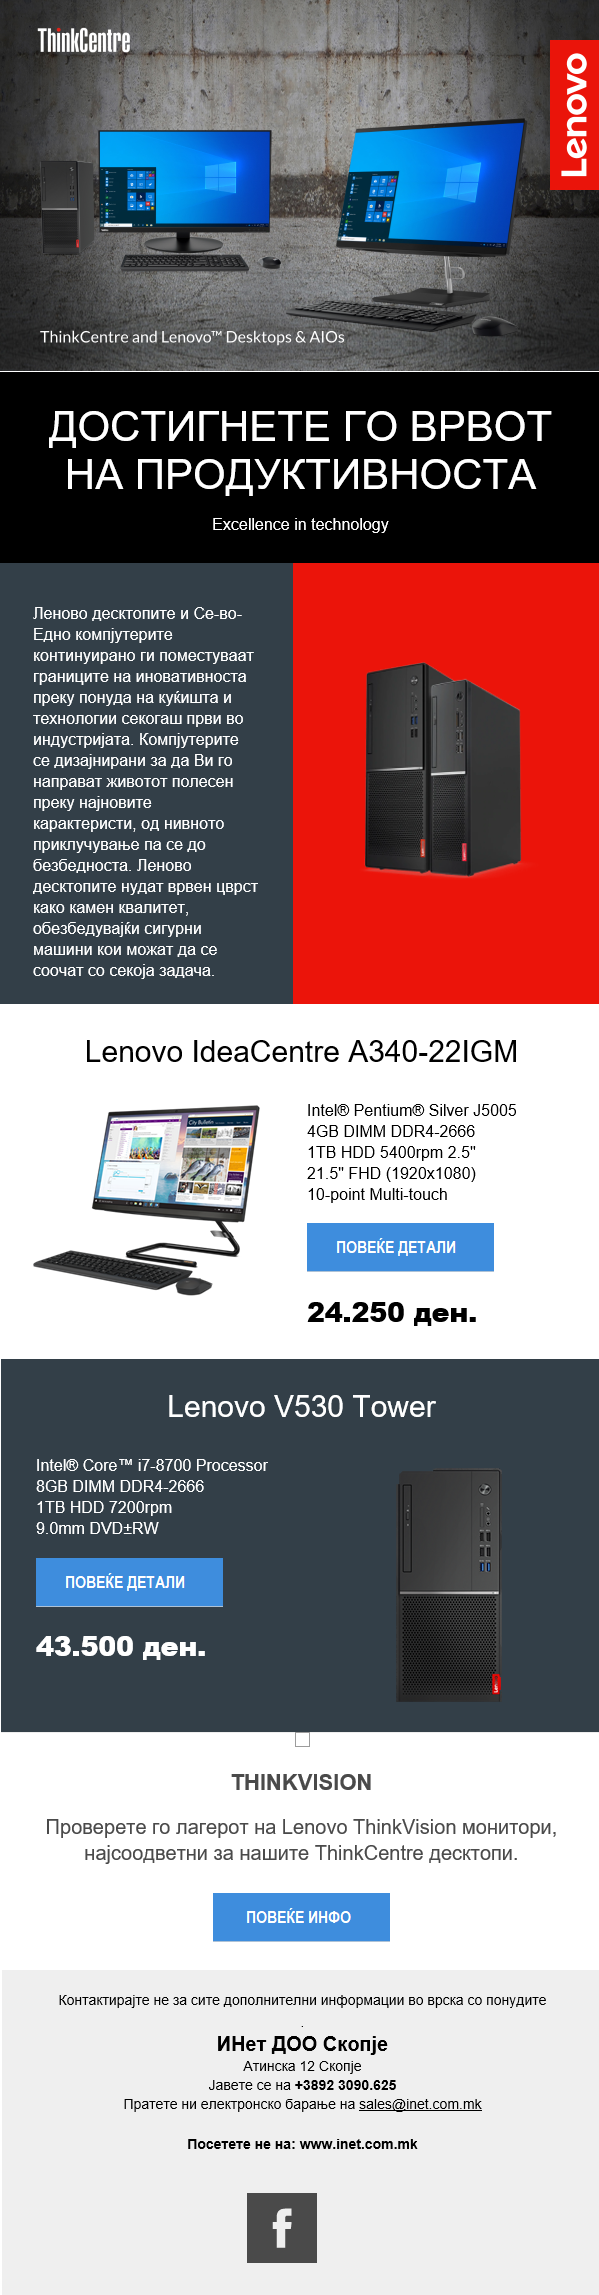 Lenovo PROMO Lenovo Se-vo-Edno i Desktopite gi probivaat granicite na inovativnosta